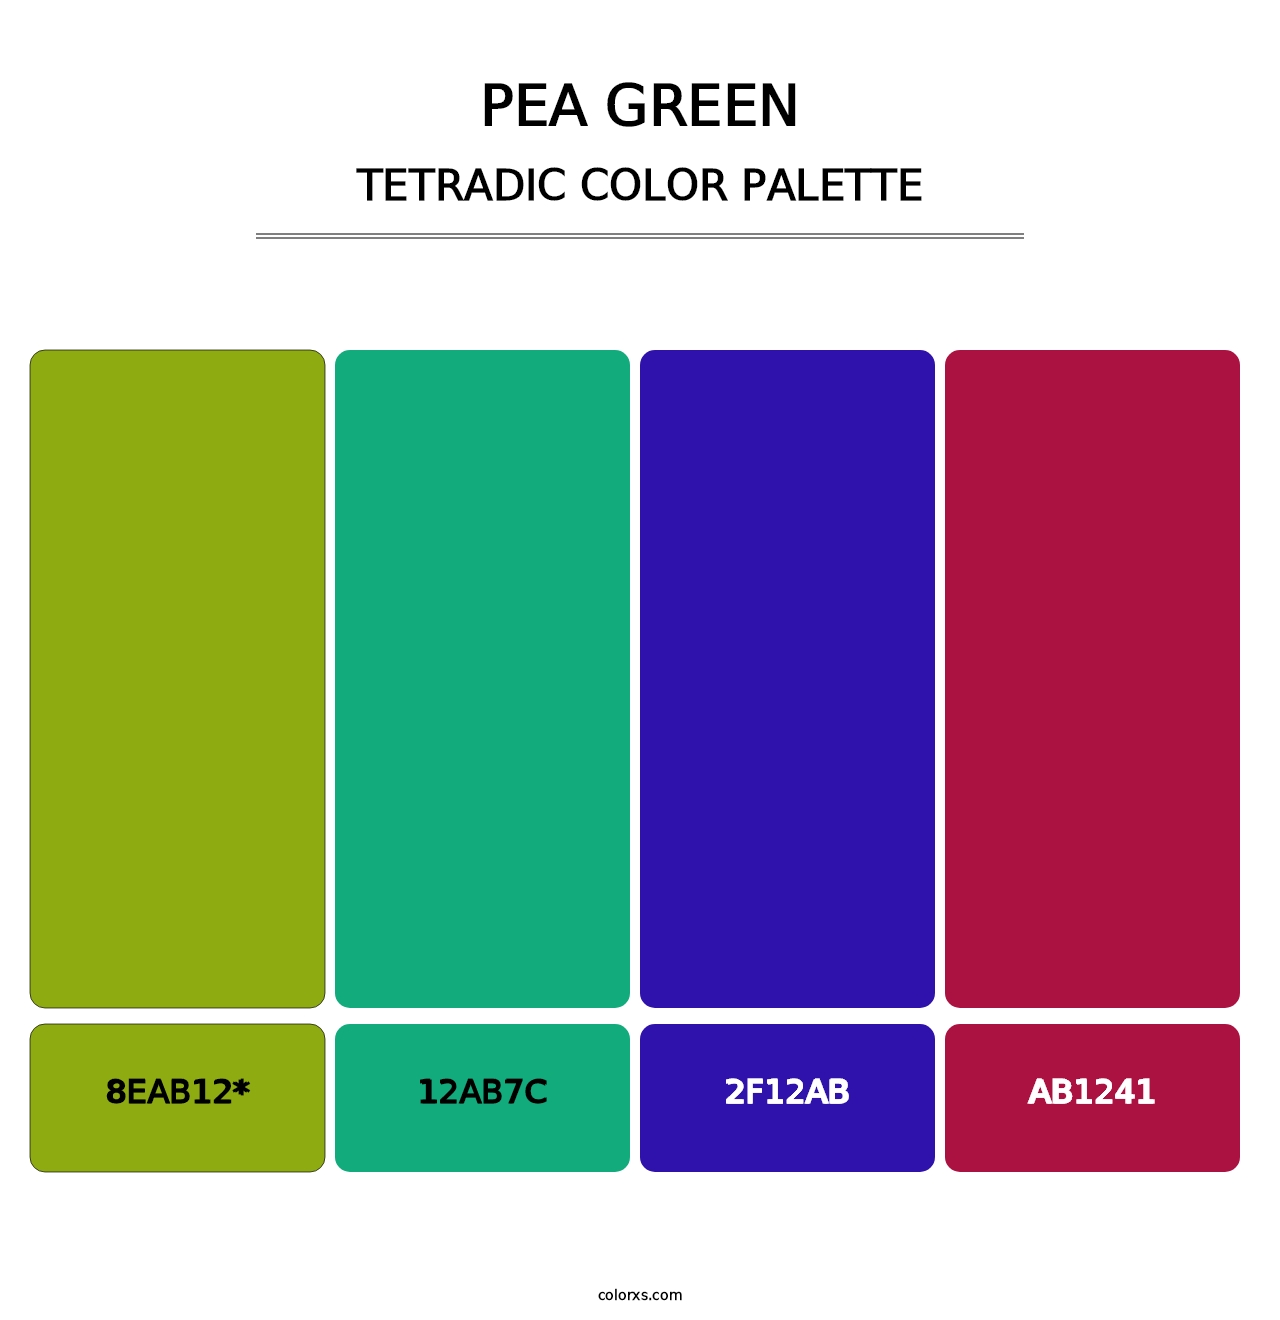 Pea Green - Tetradic Color Palette